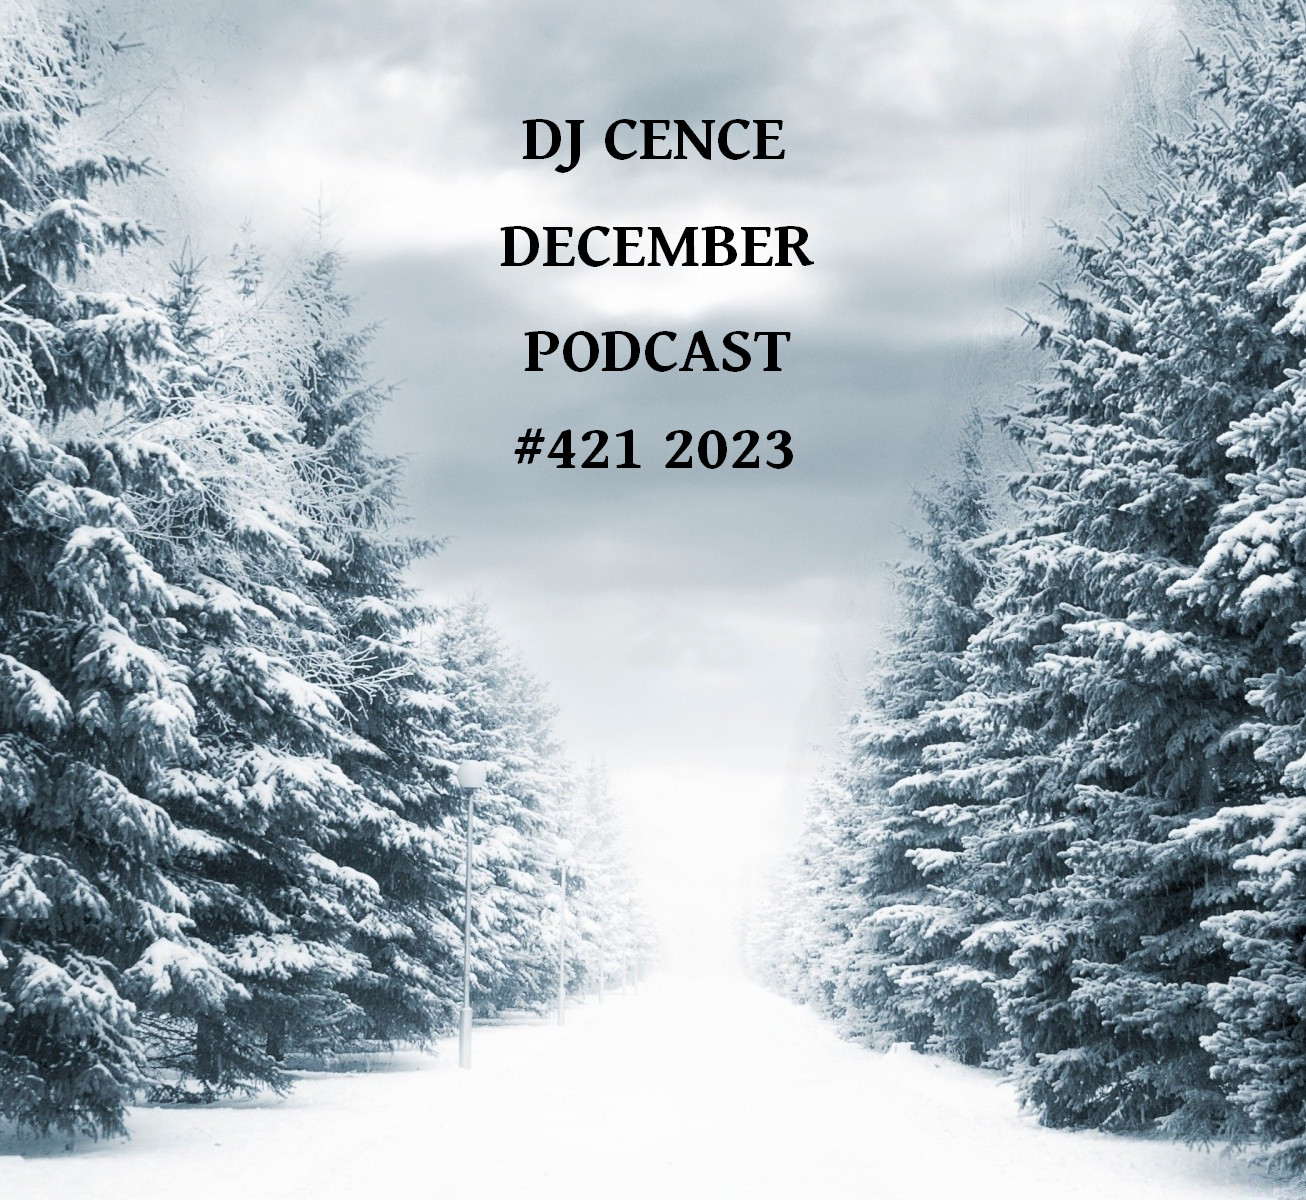 DJ CENCE DECEMBER PODCAST #421 #2023